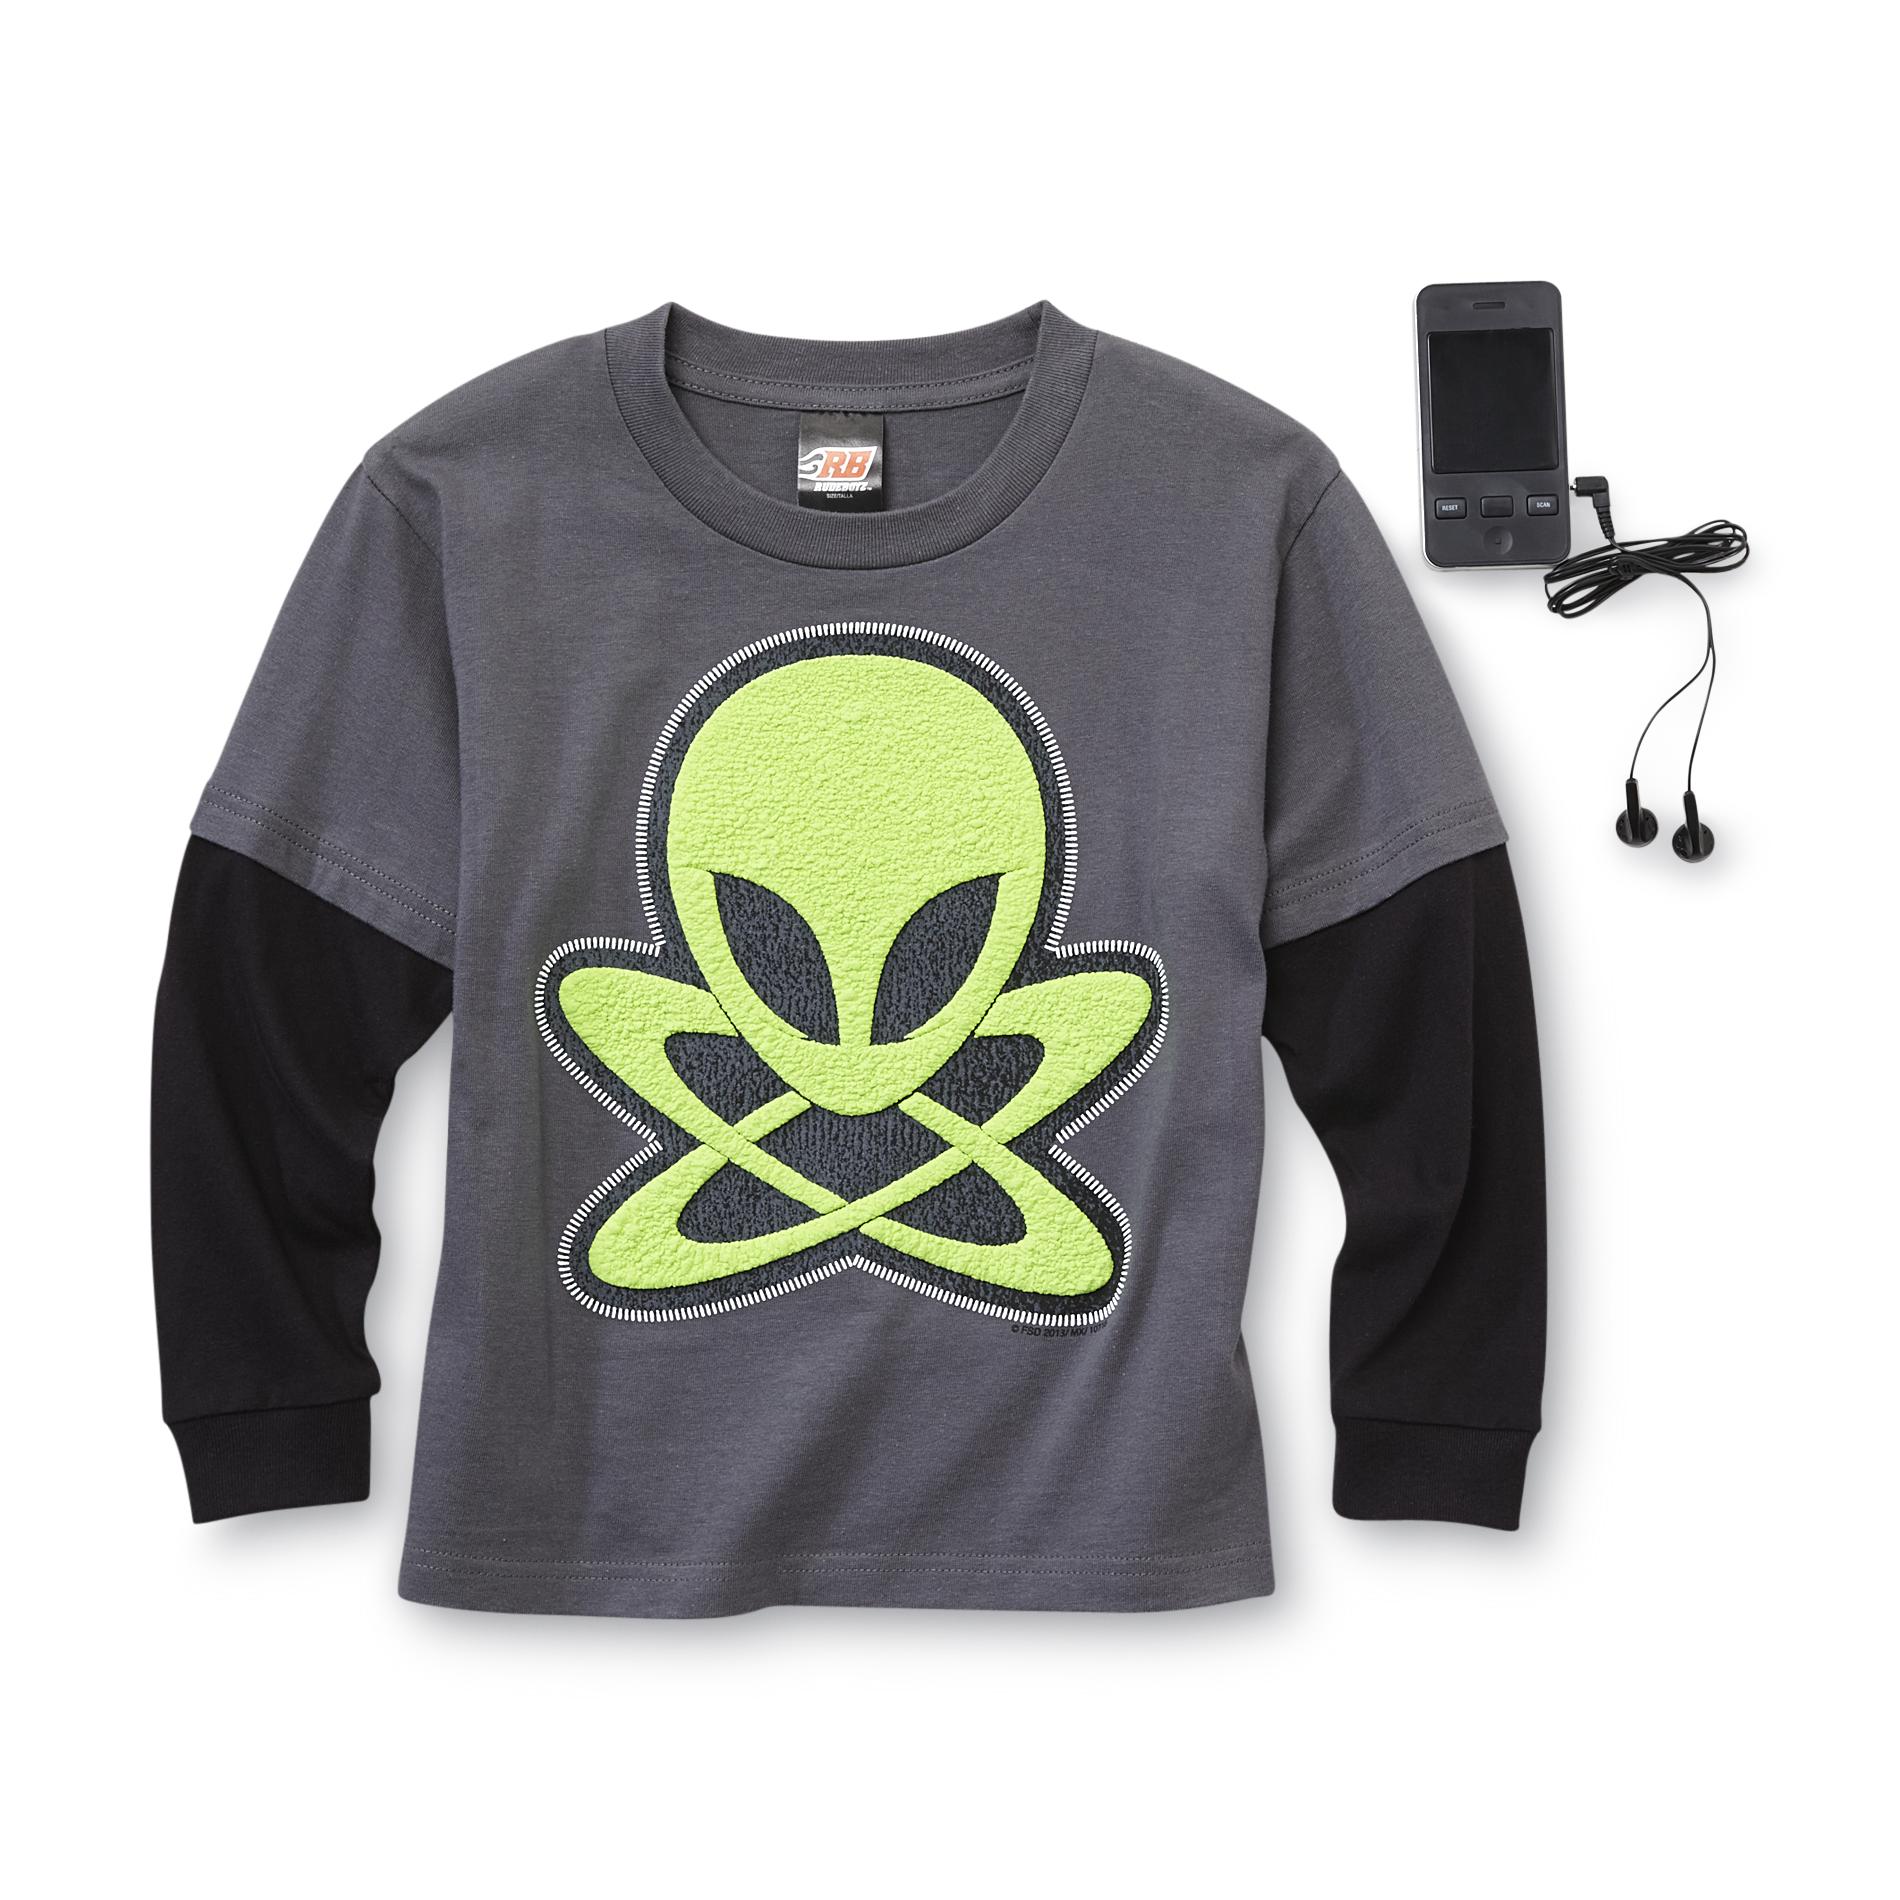 Rudeboyz Boy's Graphic T-Shirt & Radio - Alien